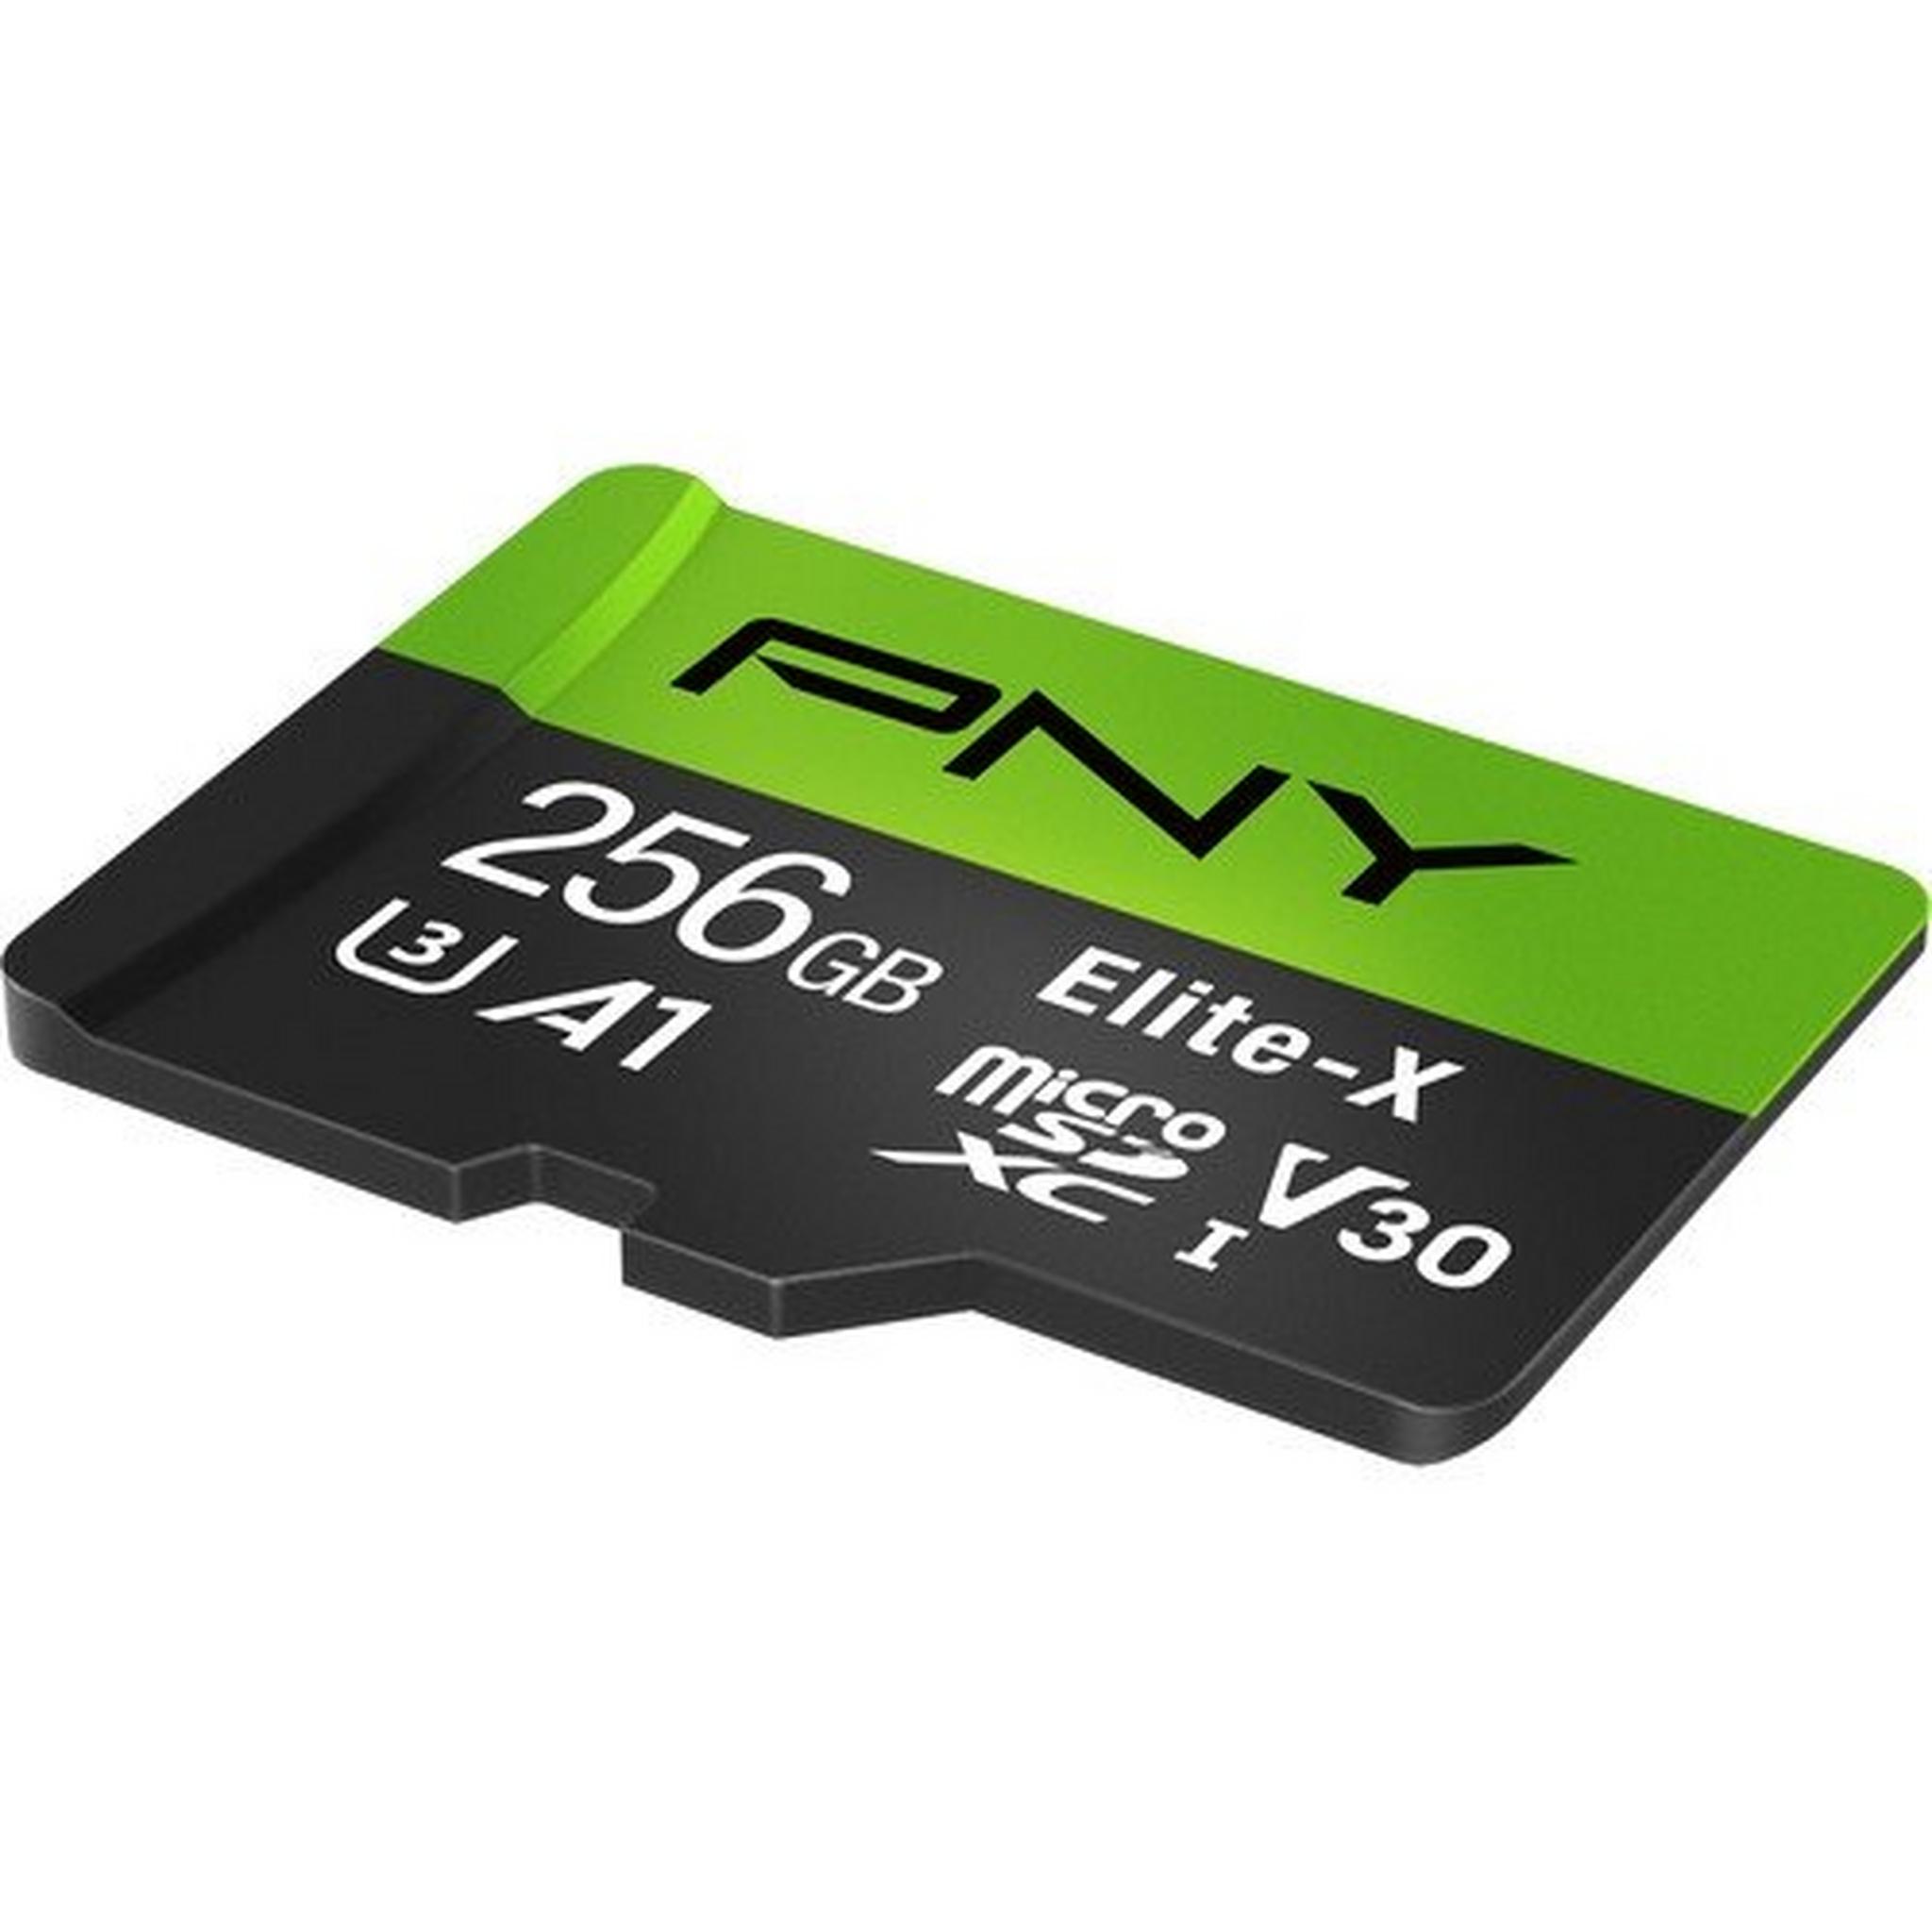 PNY Elite-X MicroSD Card 256GB